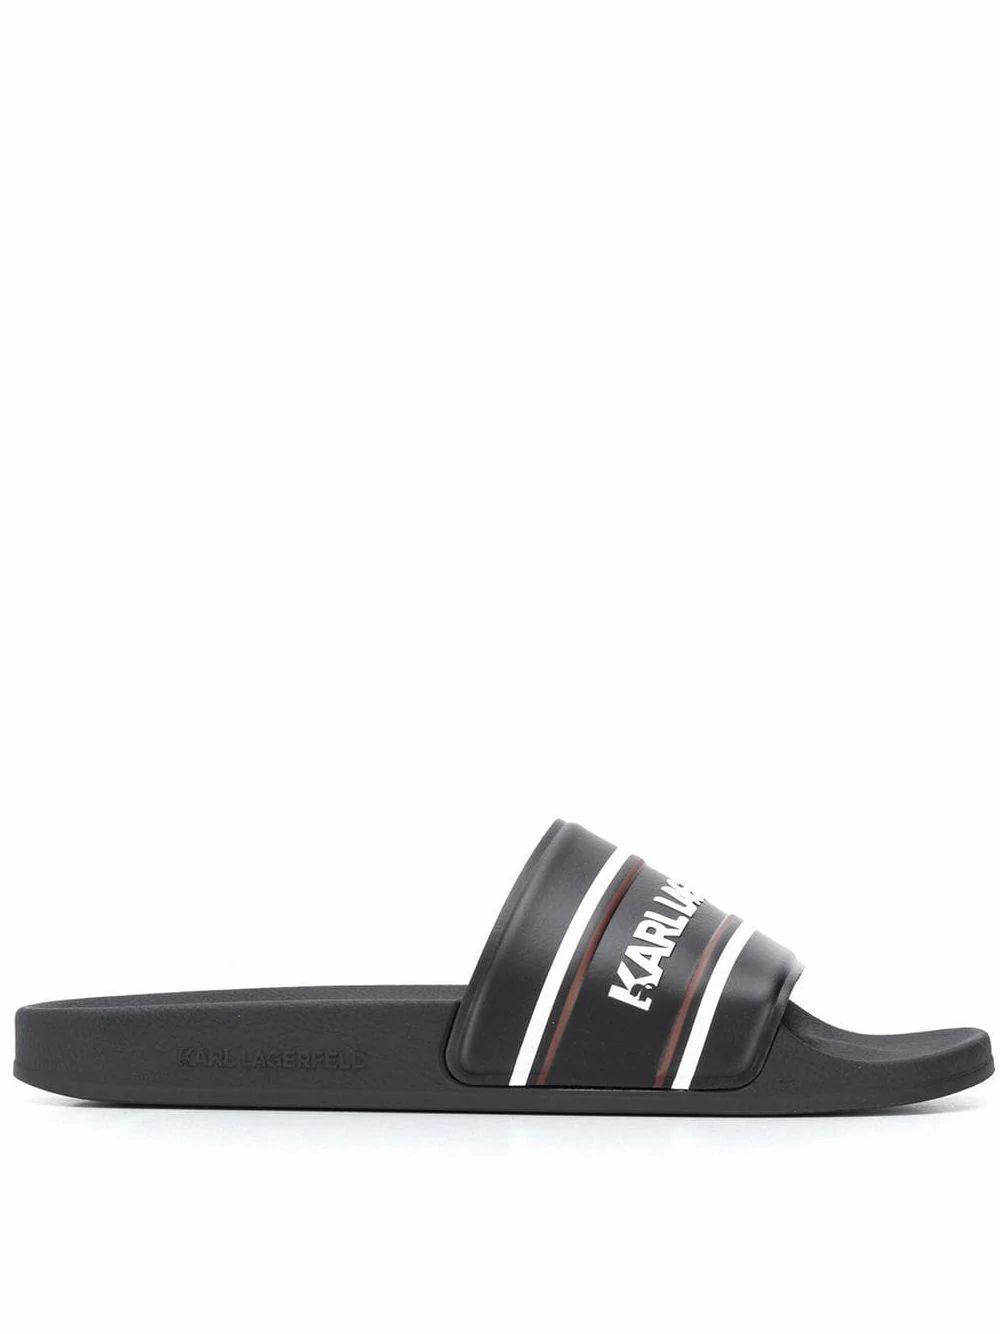 Karl Lagerfeld Rubber Sandals in Black for Men - Lyst